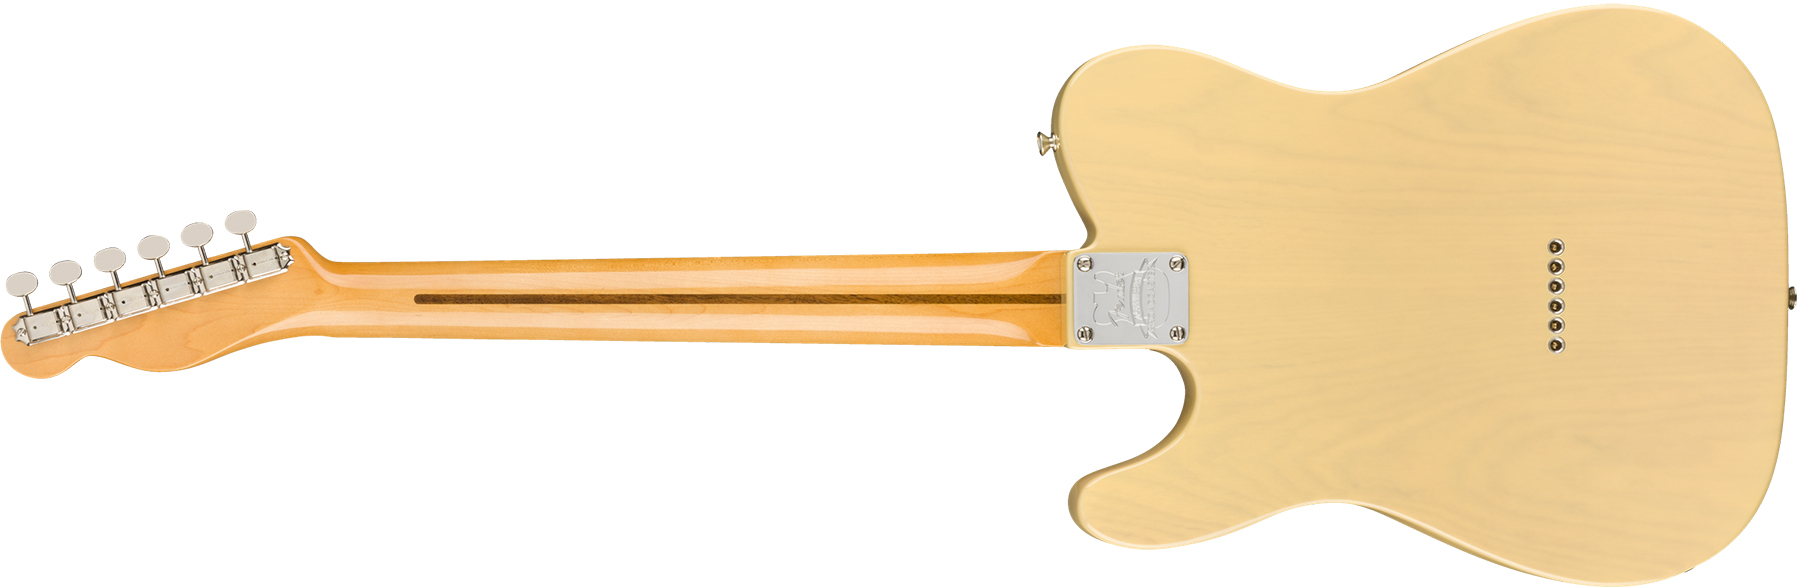 Fender Tele Broadcaster 70th Anniversary Usa Mn - Blackguard Blonde - Guitare Électrique Forme Tel - Variation 1